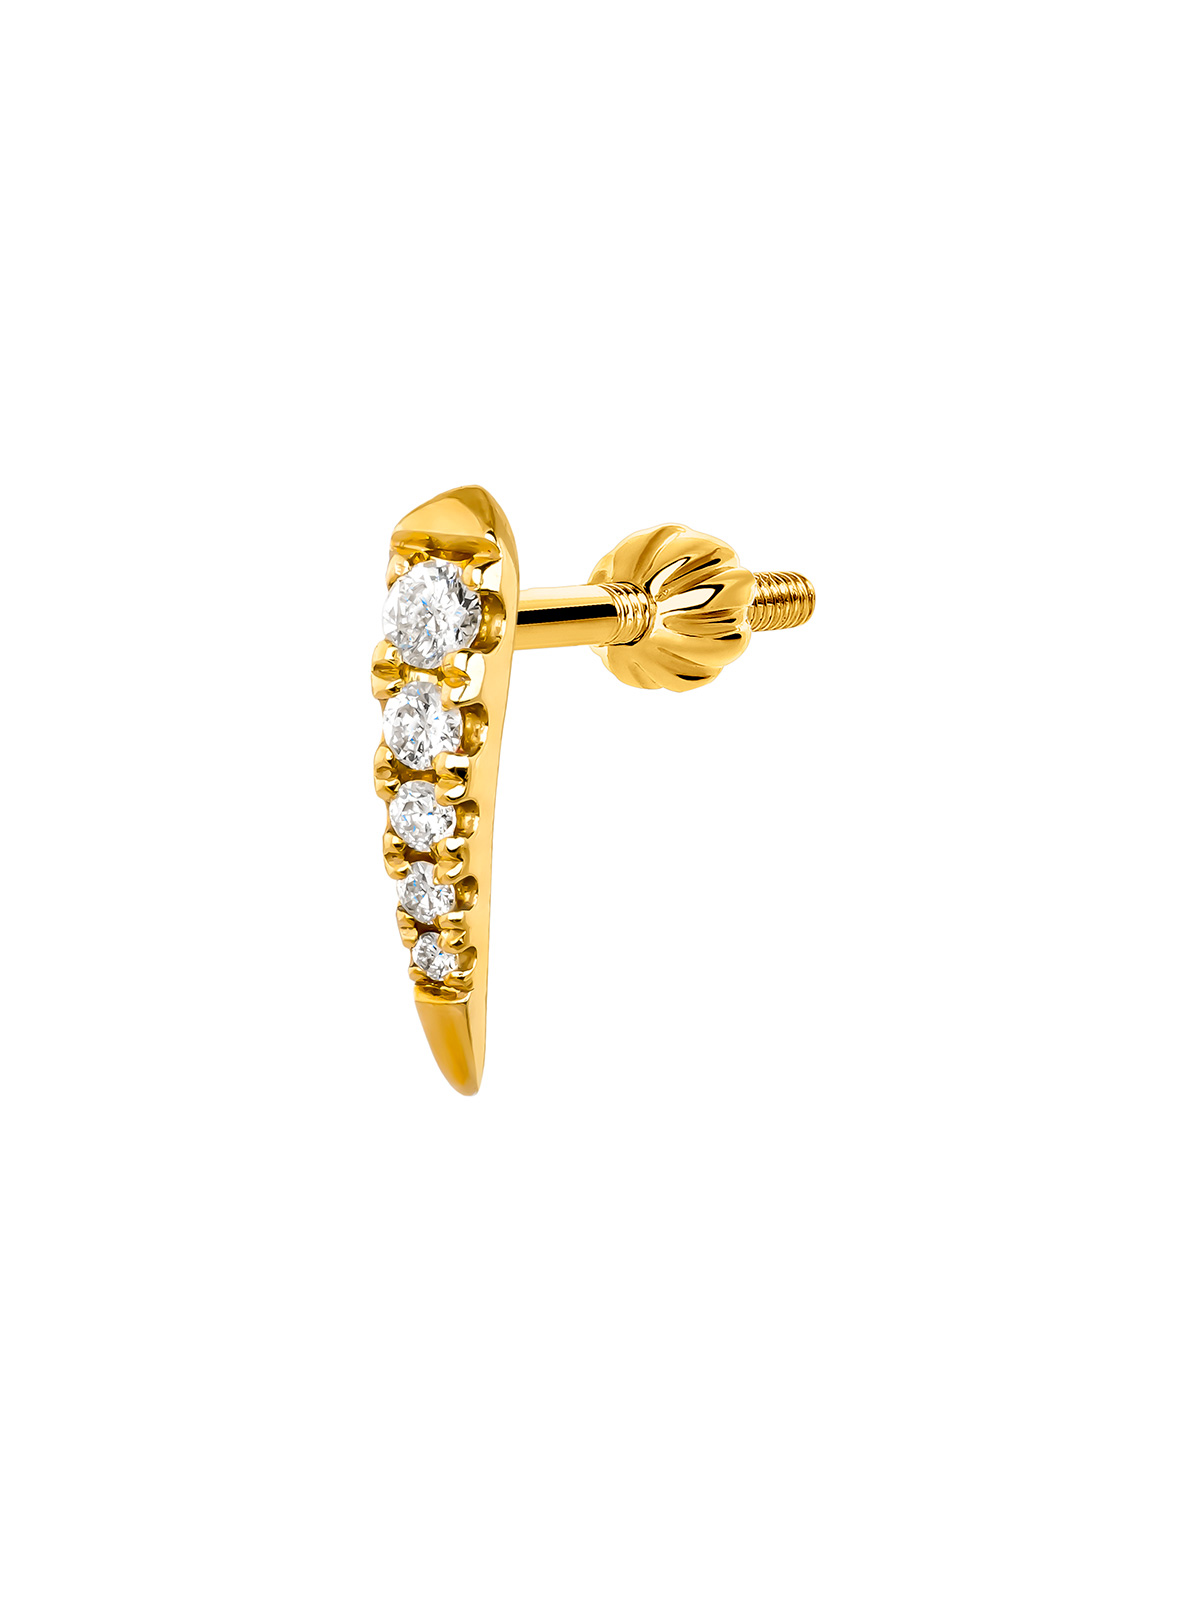 Individual 9K yellow gold earring with diamonds.